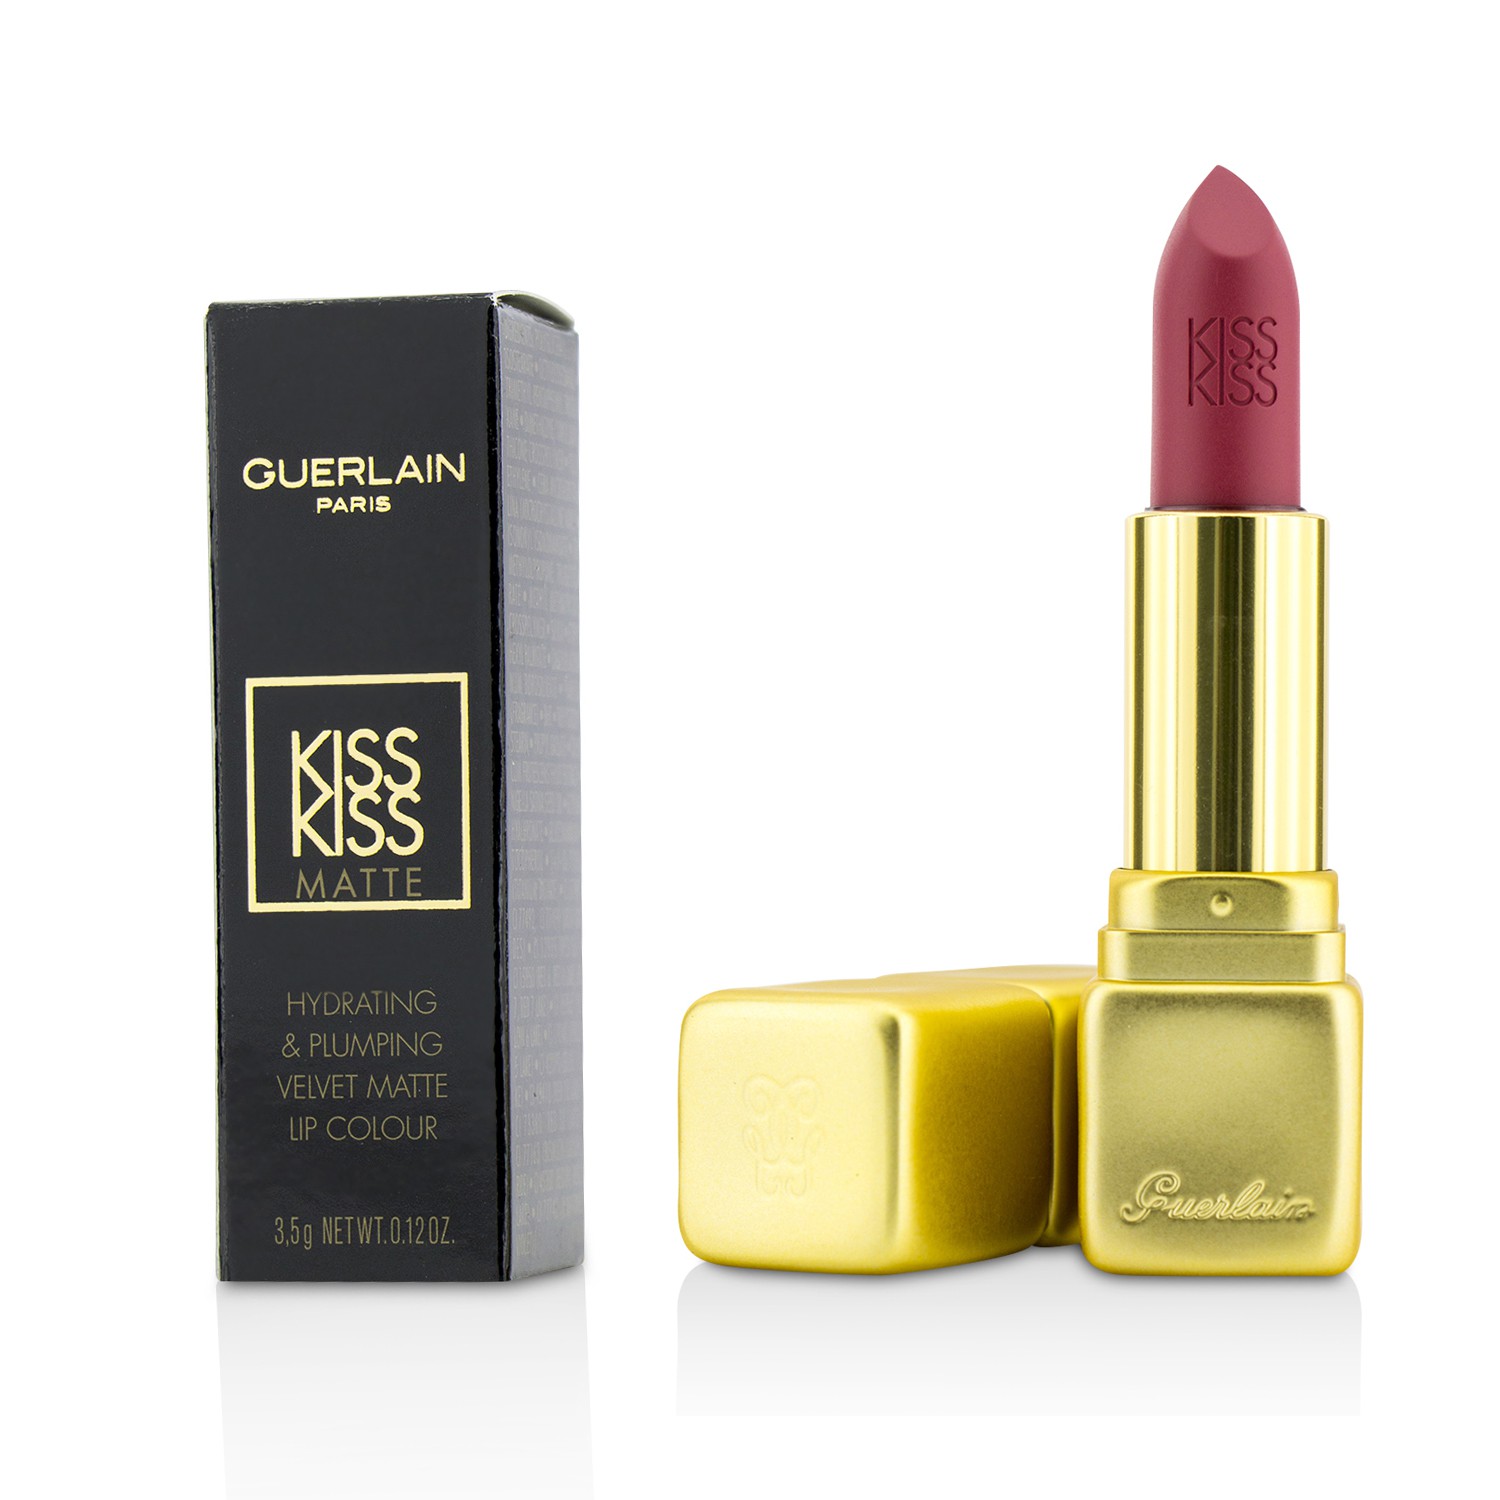 KissKiss Matte Hydrating Matte Lip Colour - # M375 Flaming Rose Guerlain Image